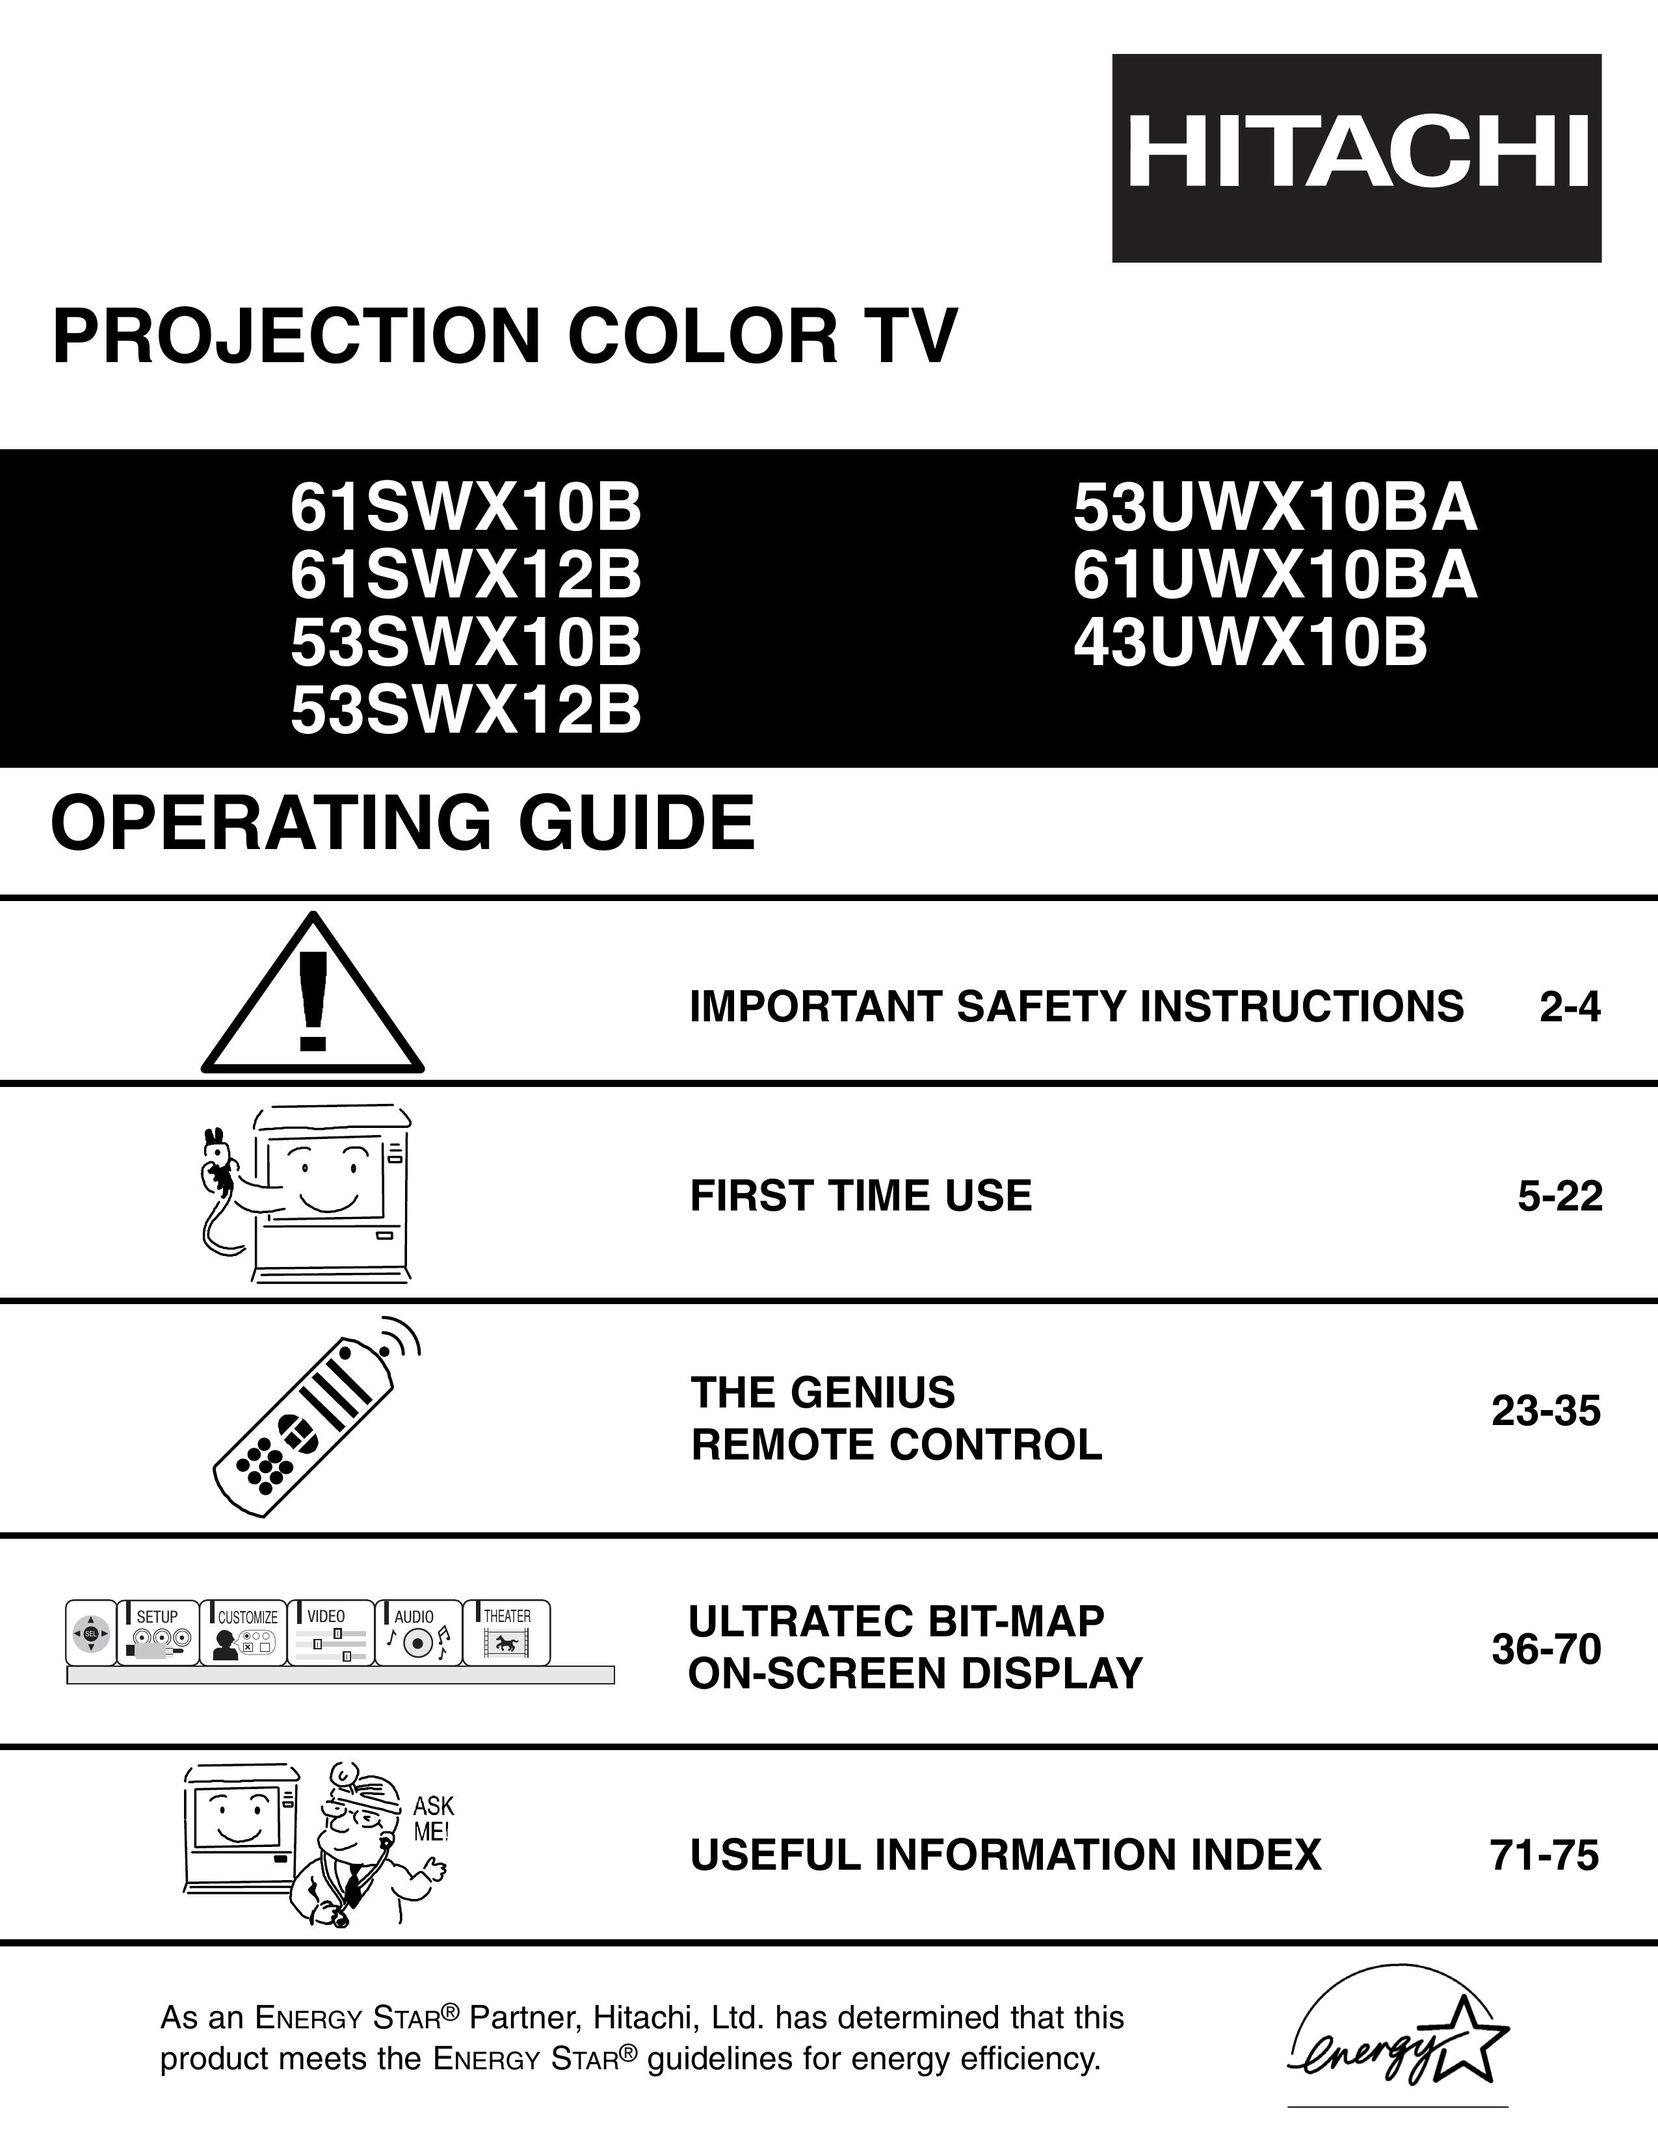 Hitachi 53UWX10BA CRT Television User Manual